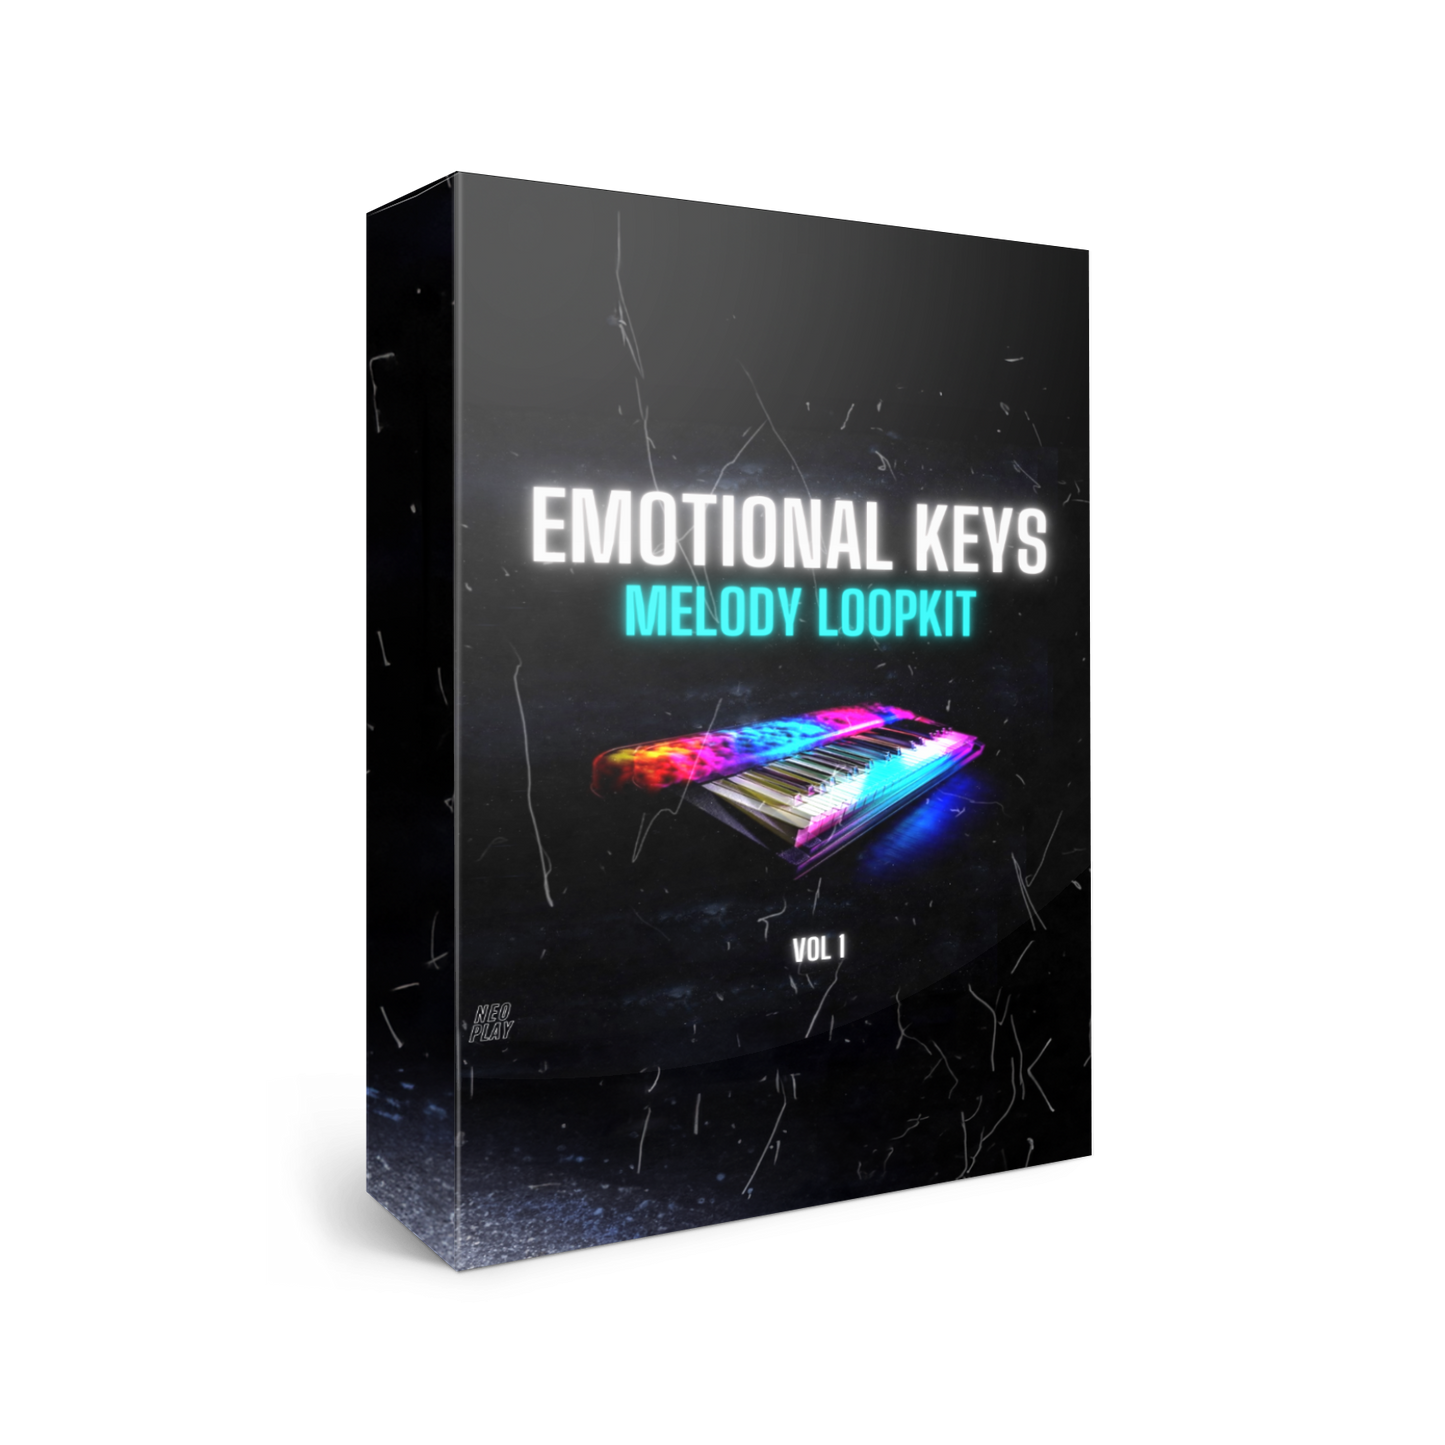 Emotional Keys Vol. 1 (Melody Loopkit)